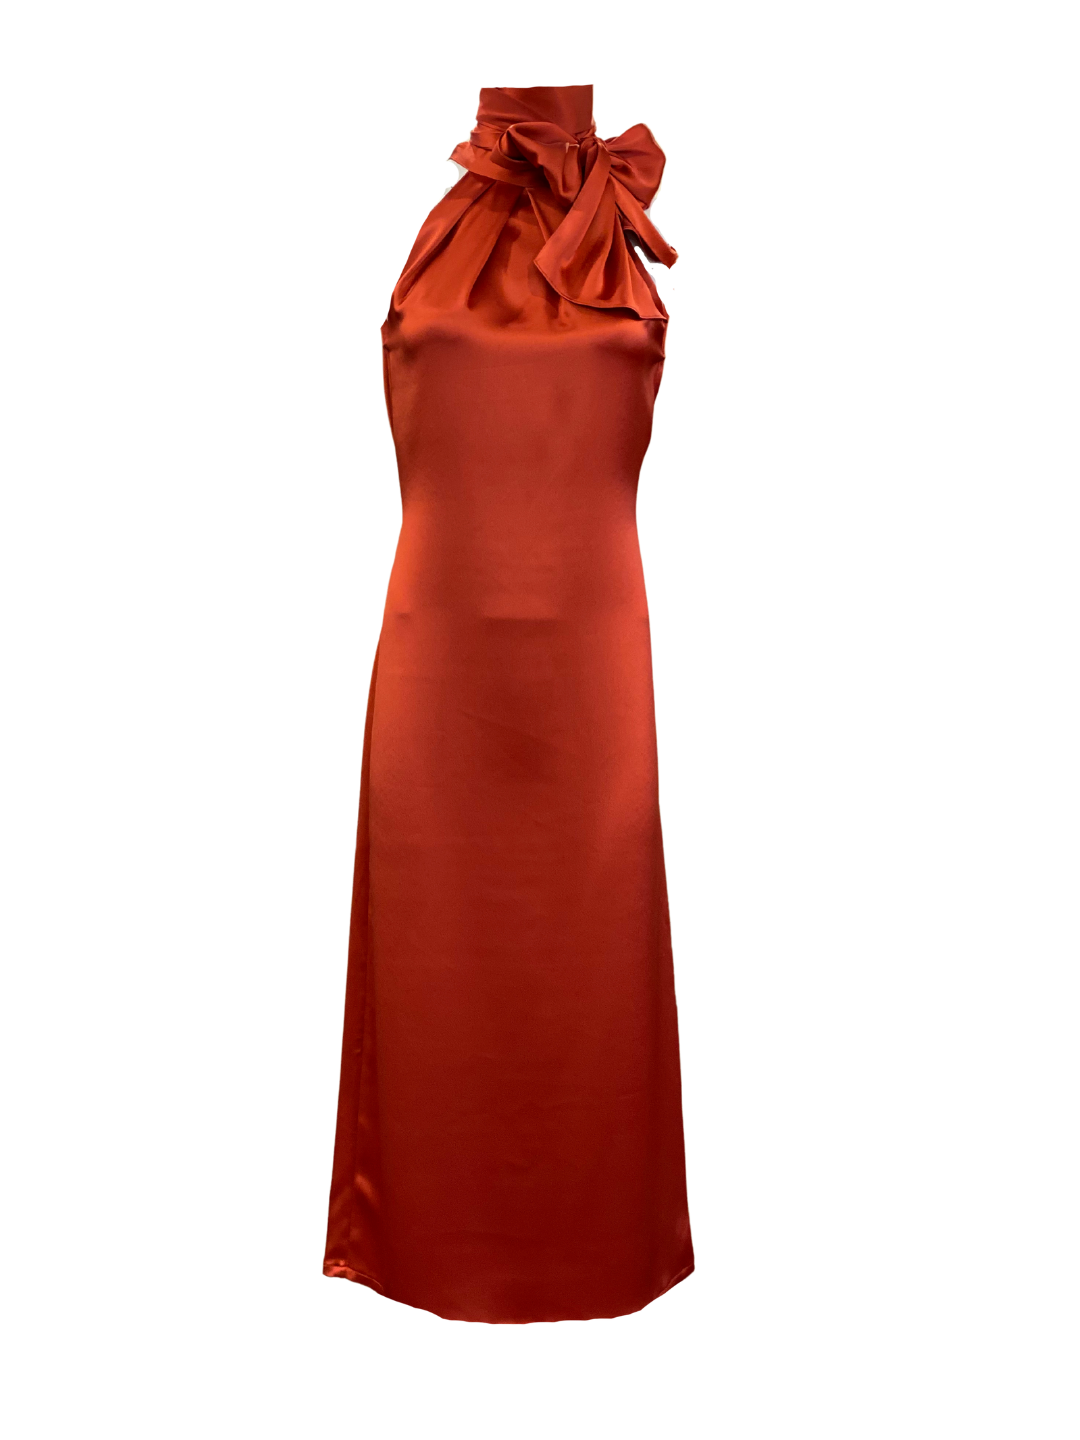 Bow Halter Dress Midi (Chilli - Limited Edition)